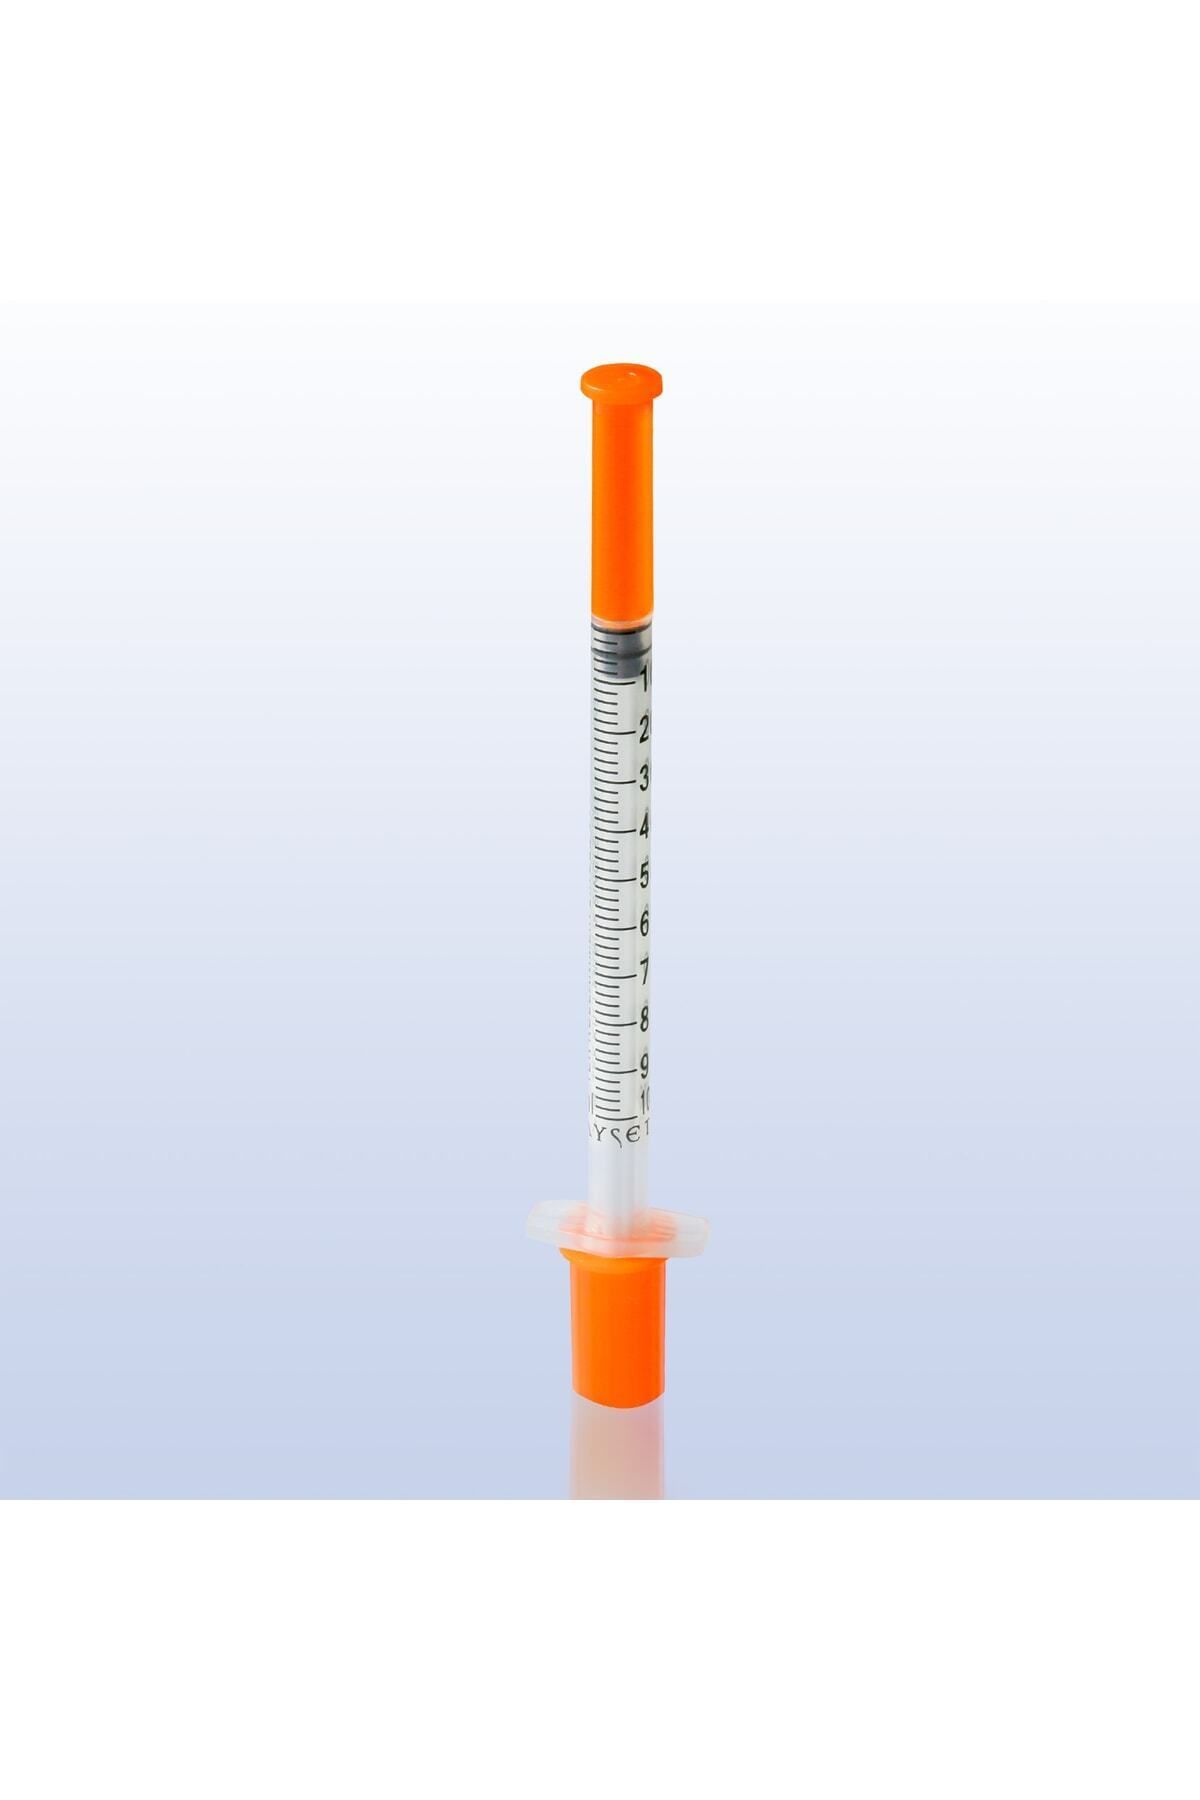 Ayset Süper Insülin Steril Şırınga 3p 0,5 ml (70570) - 0,5 Cc Insülin Enjektörü 1 Kutu (50 ADET)